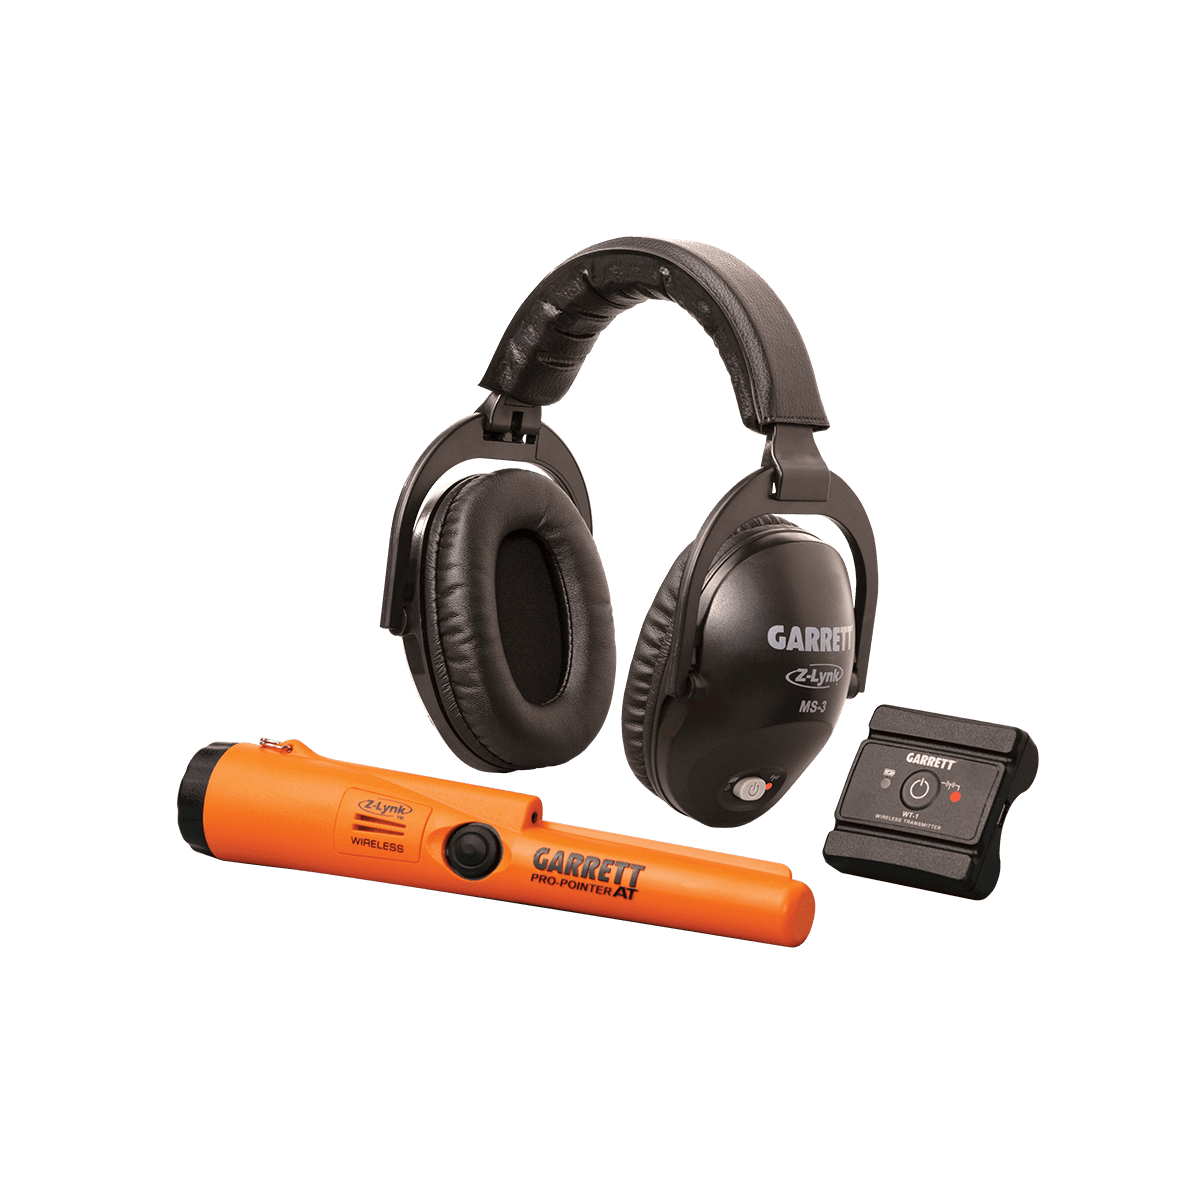 Garrett Pro-Pointer AT Z-Lynk/MS-3 Wireless Headphones Kit